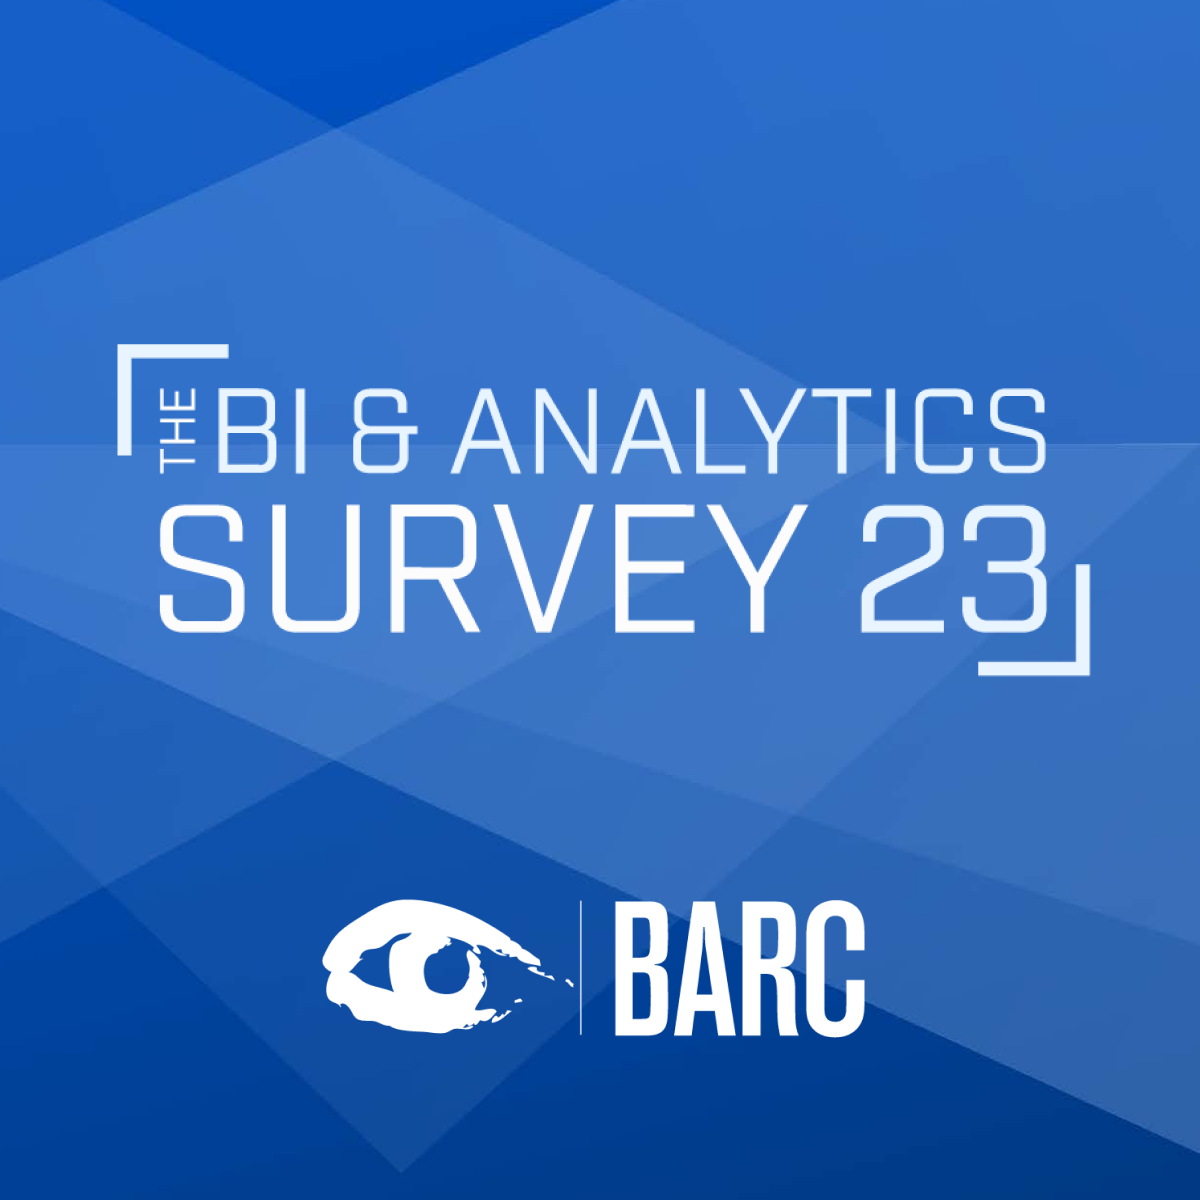 


                              

TARGIT in the BI Survey 19
